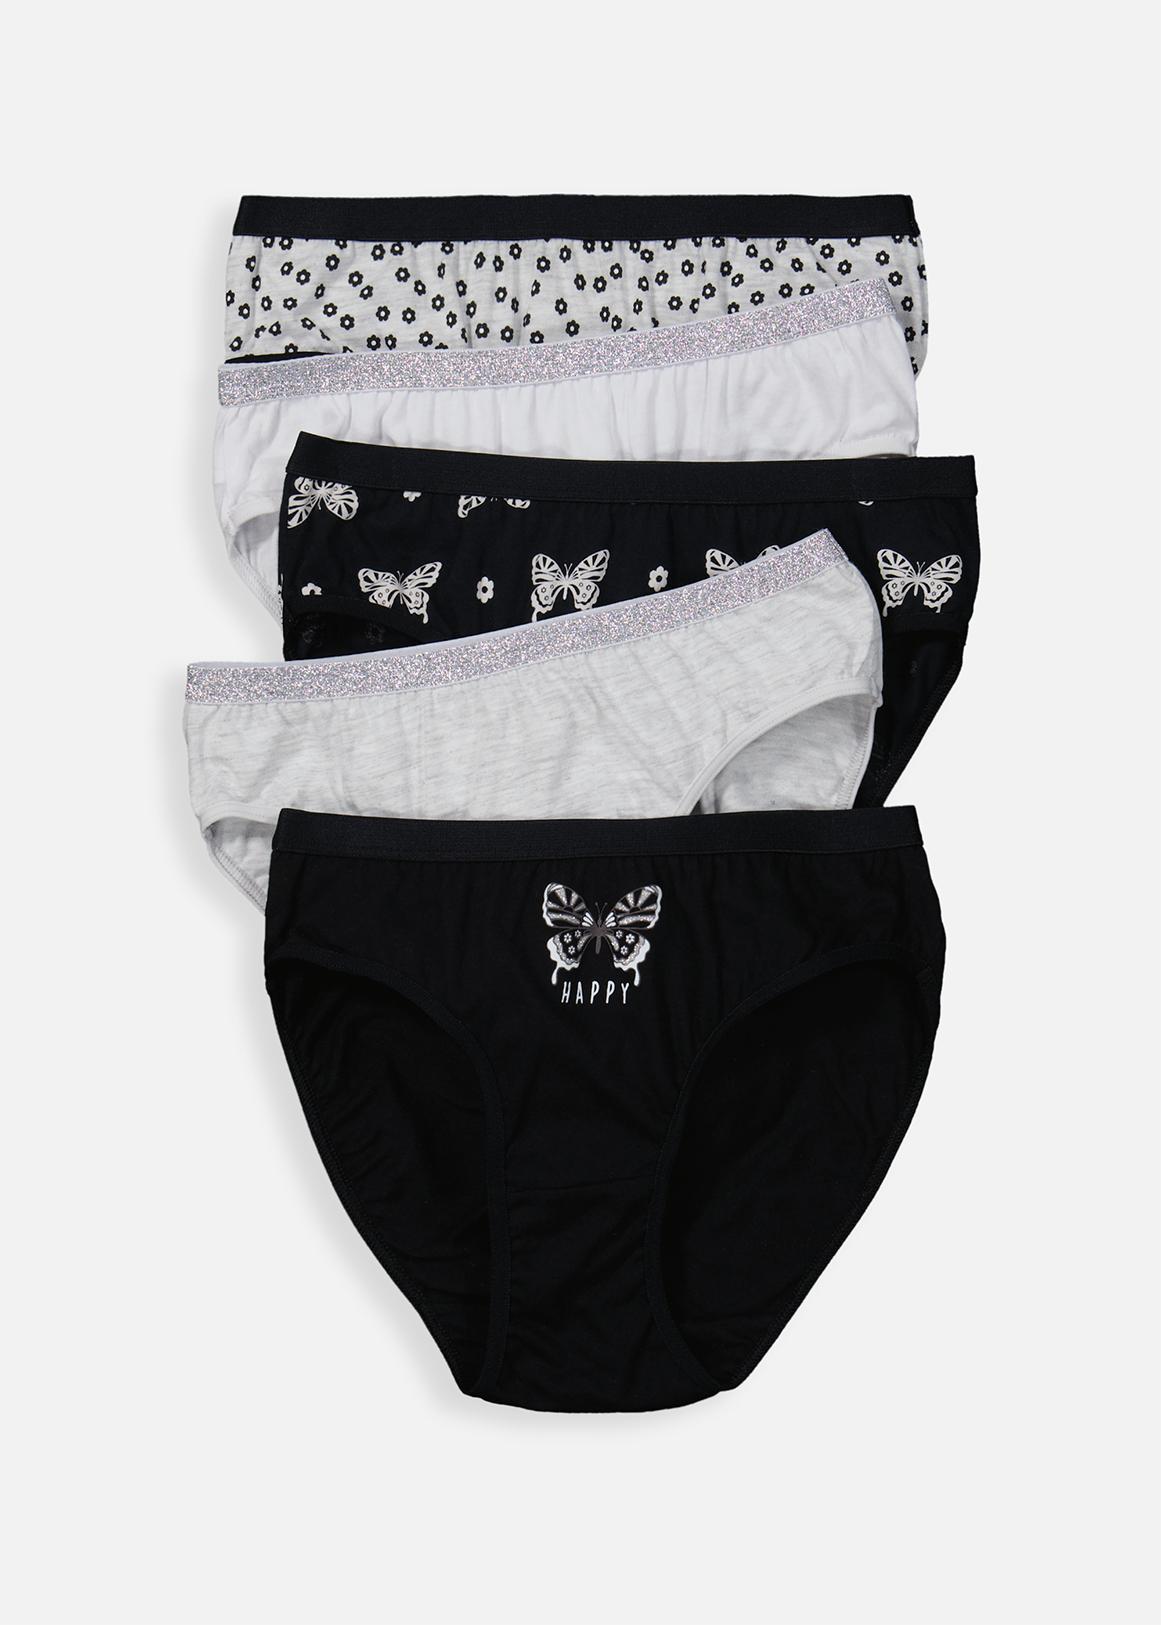 Butterfly Panties, Butterfly Underwear, Briefs, Cotton Briefs